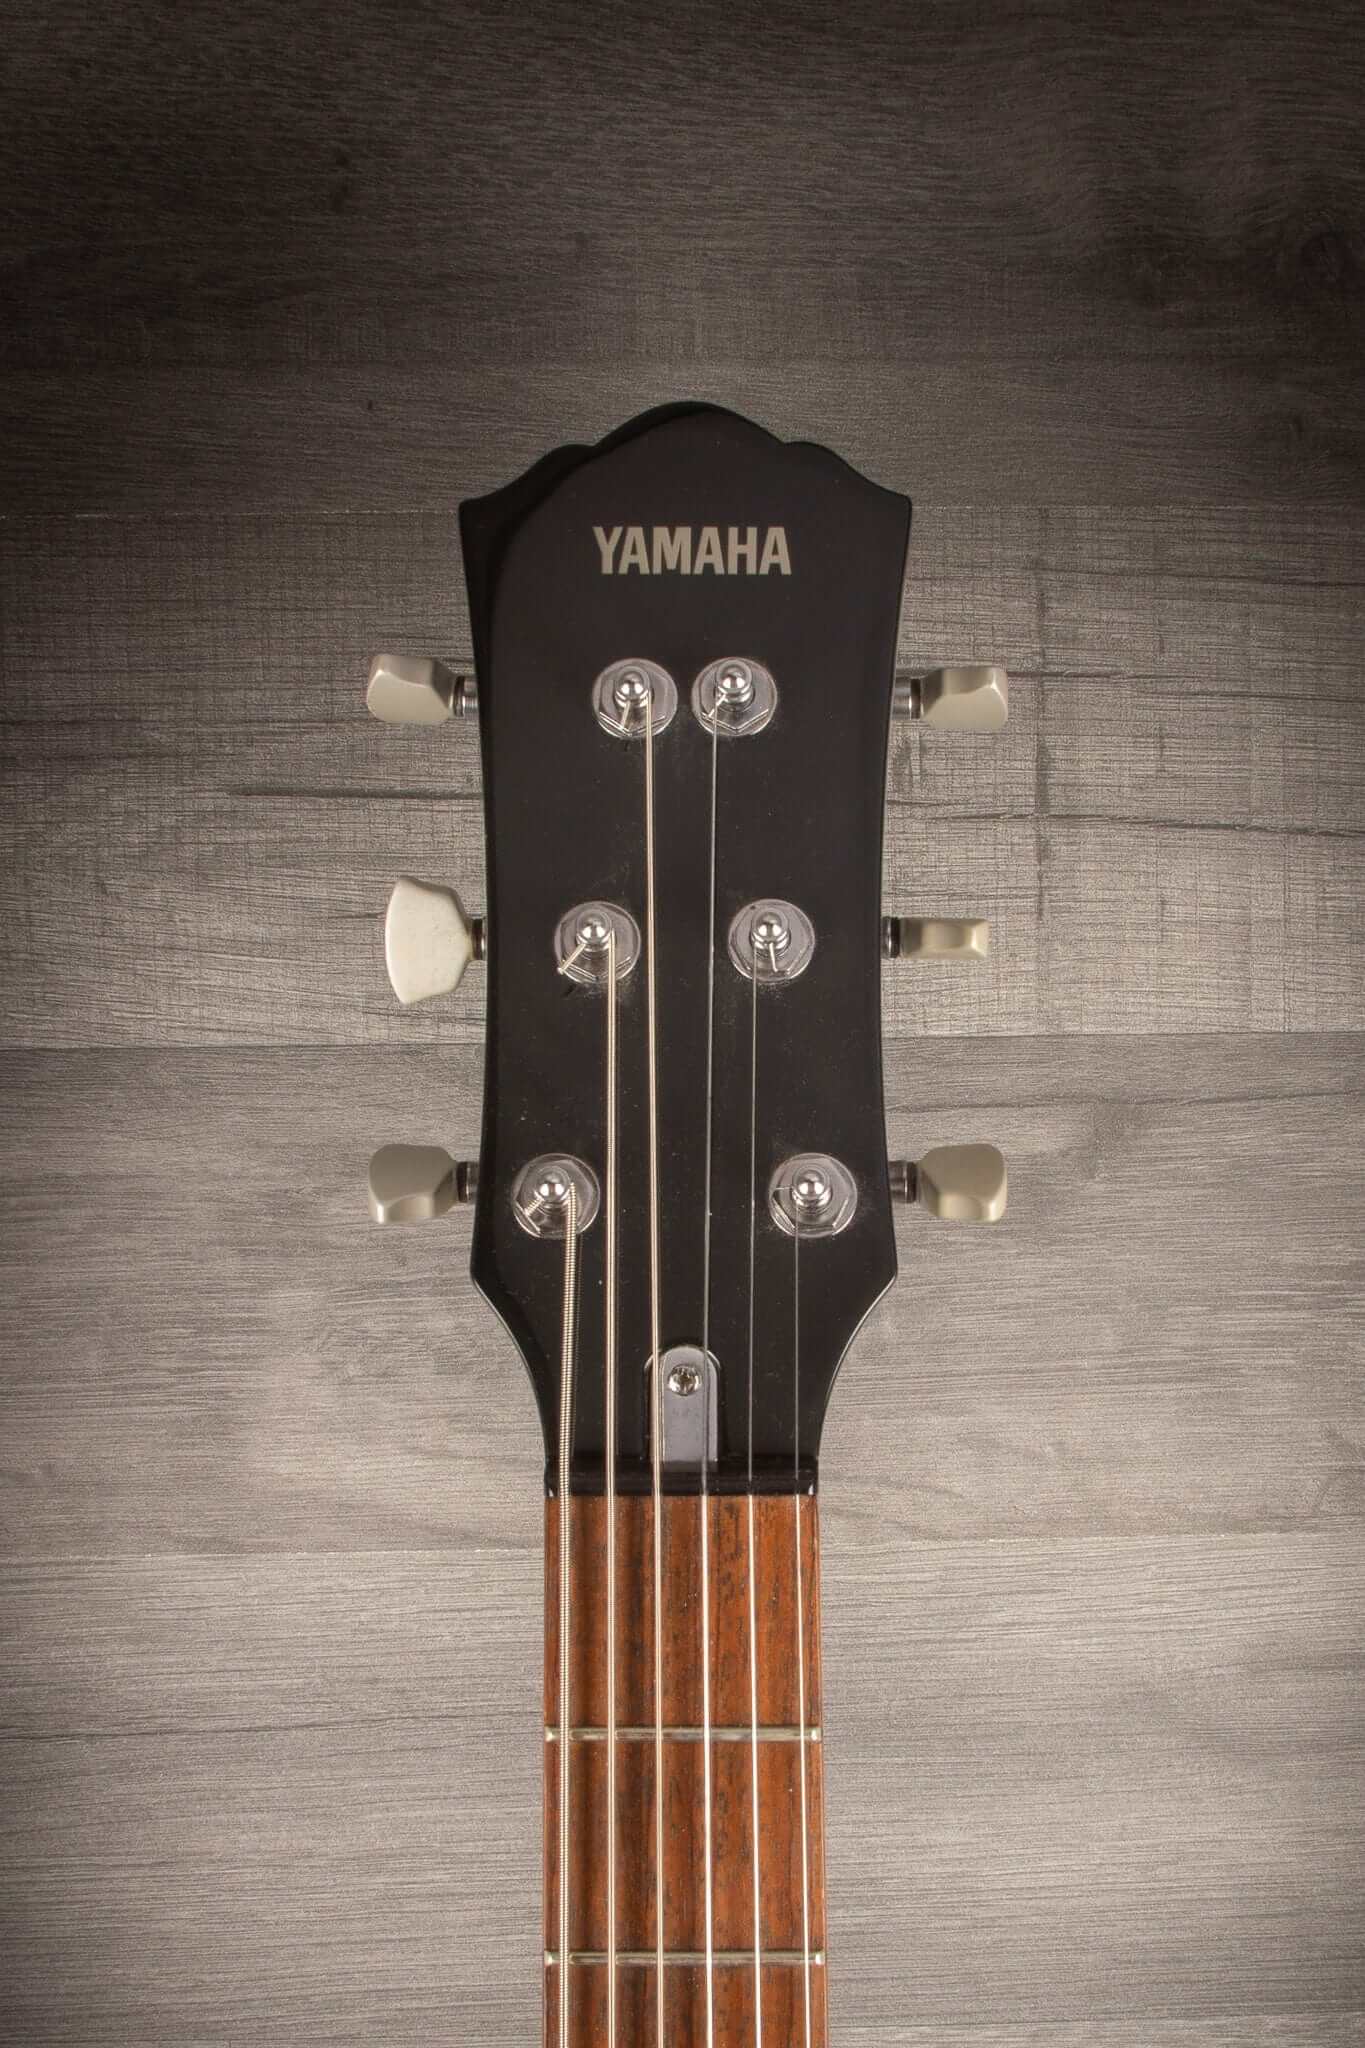 Yamaha Electric Guitar USED - Yamaha AES820D6 BLACK